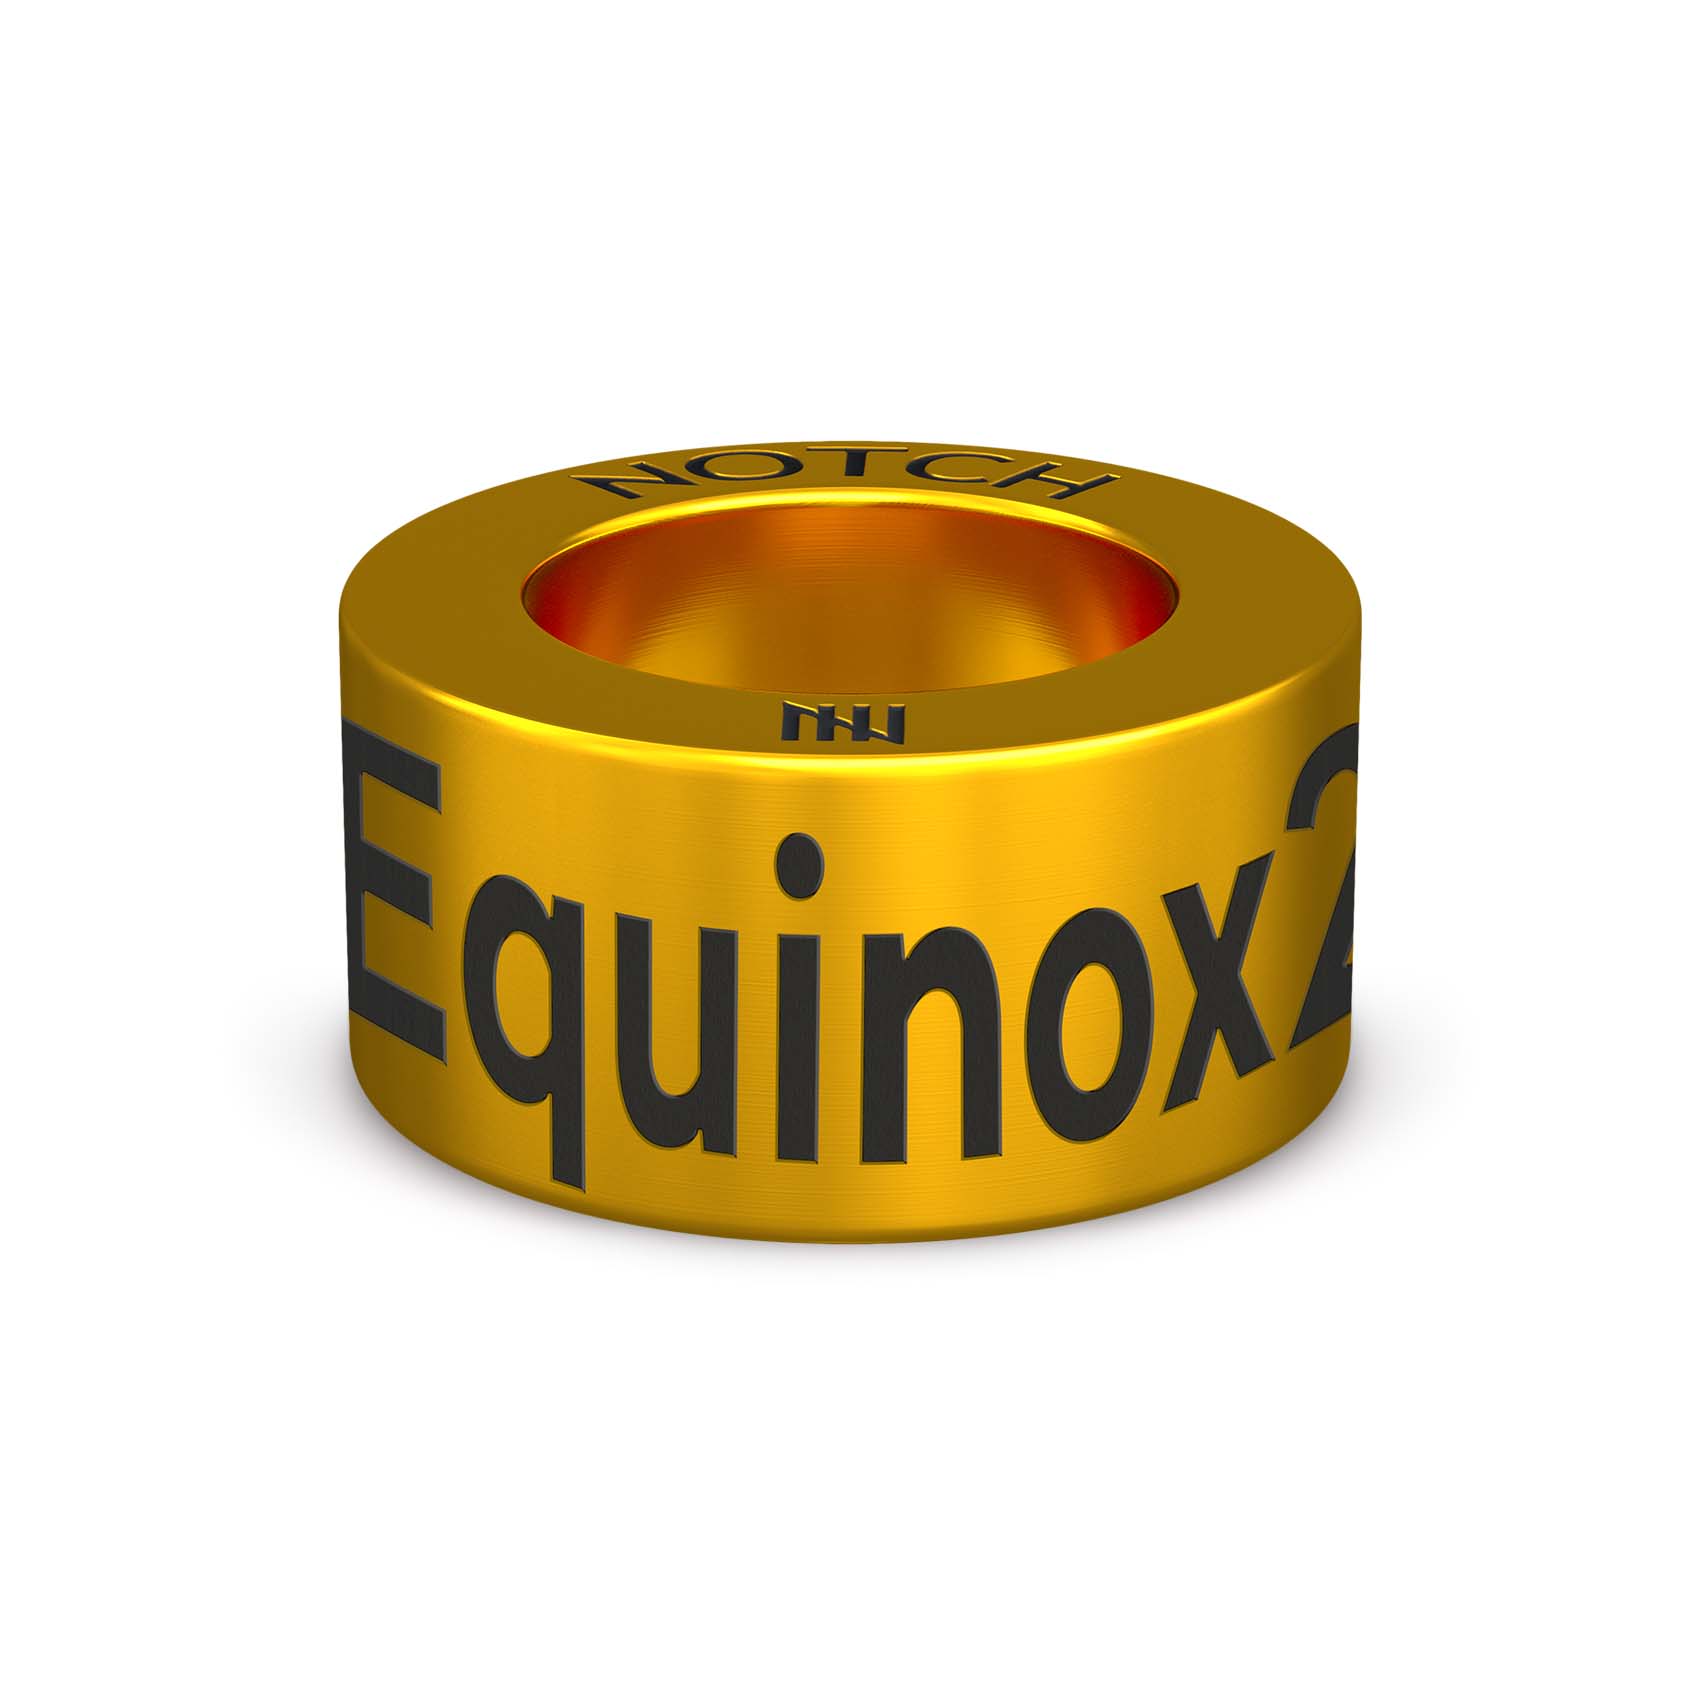 Equinox24 Fun Run NOTCH Charm